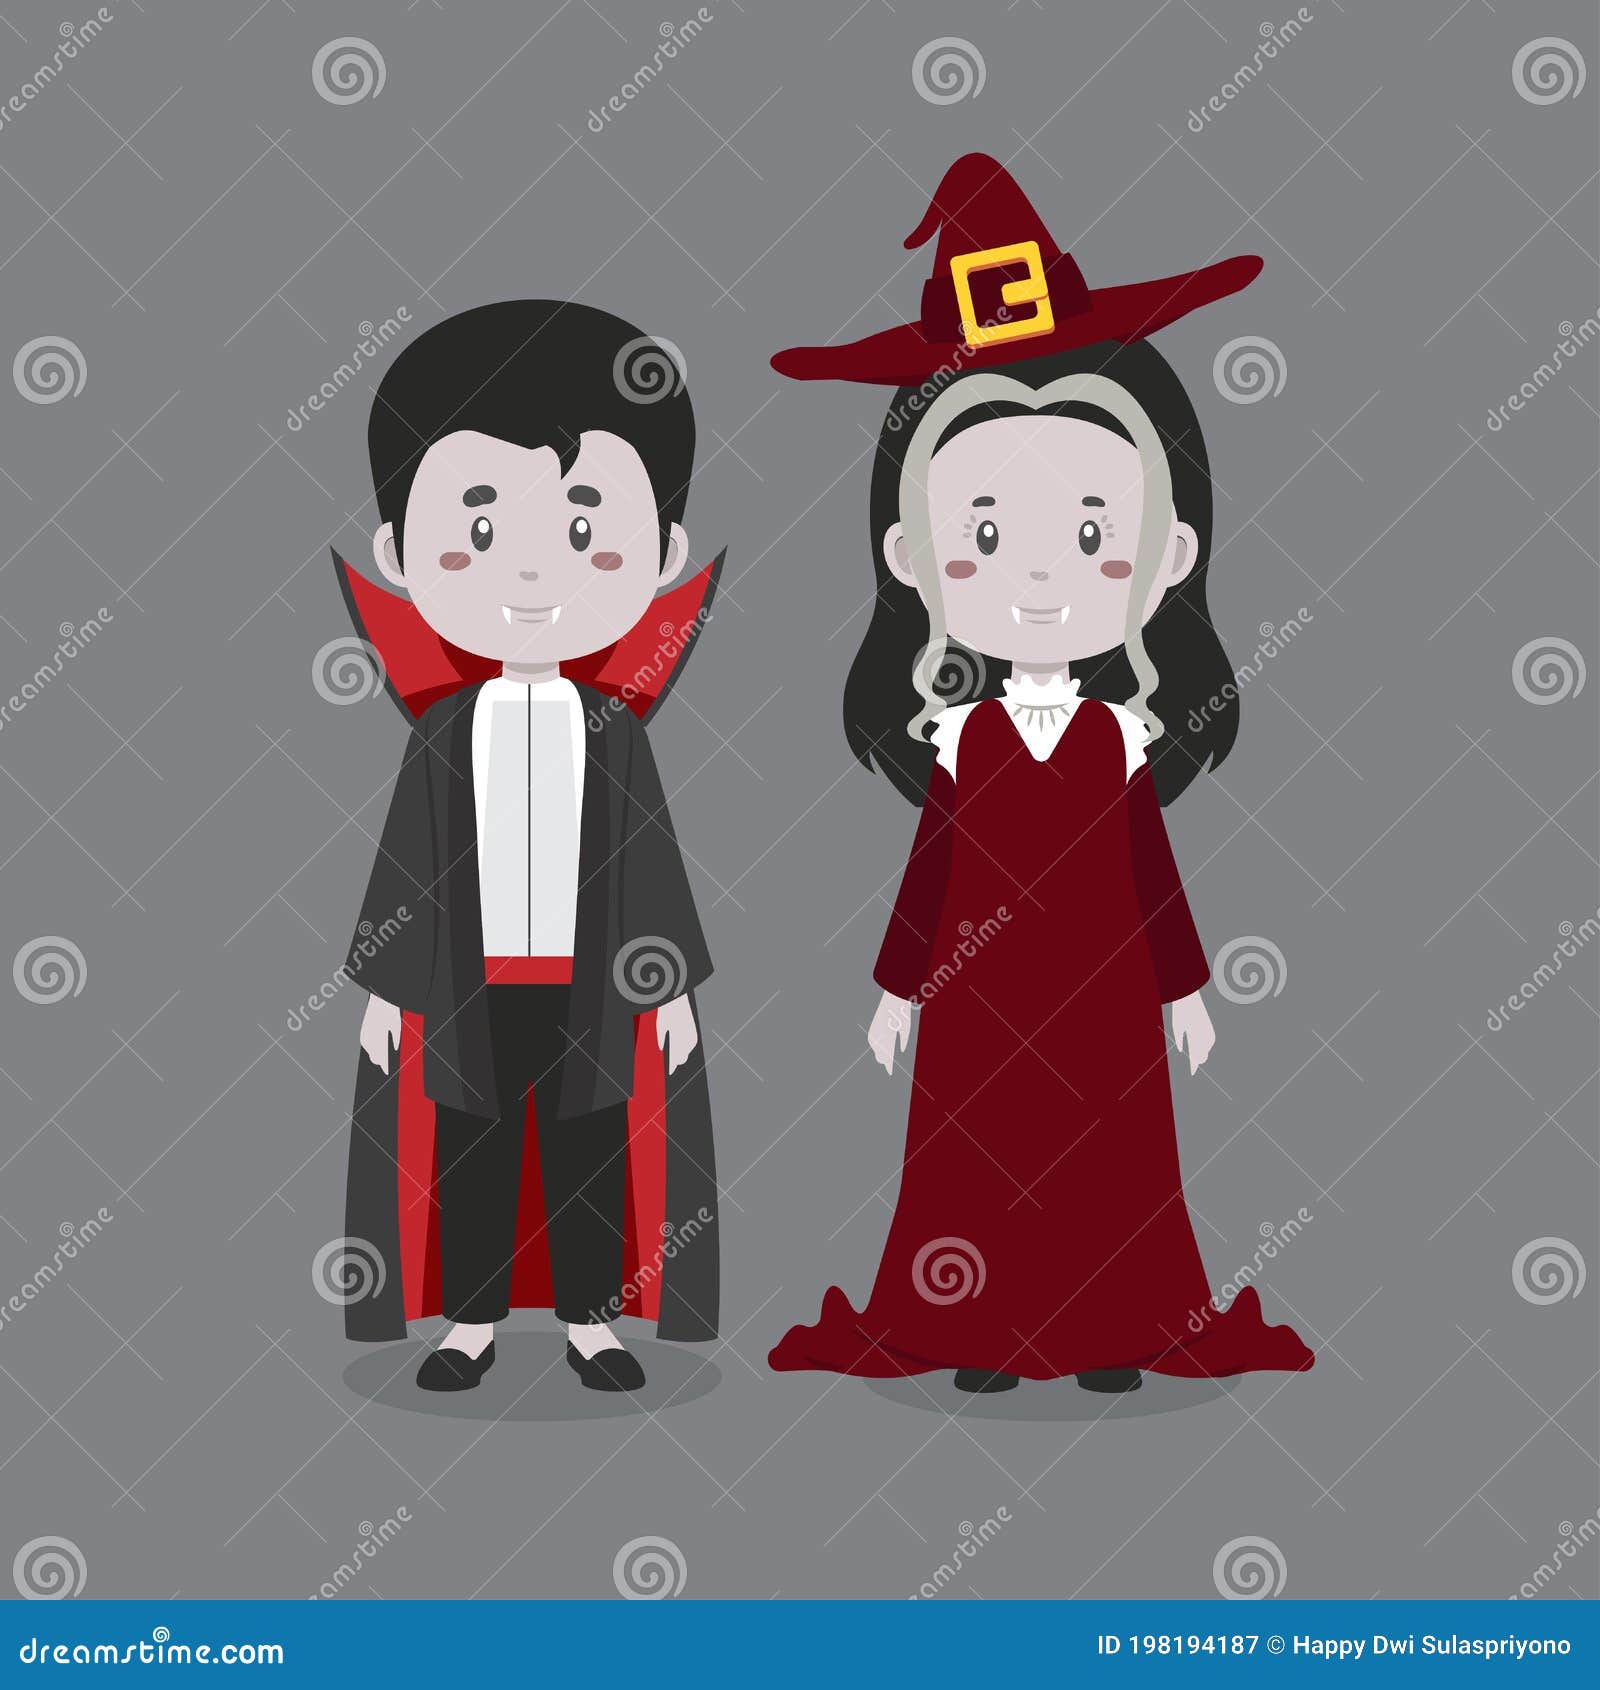 couple character wearing halloween costum